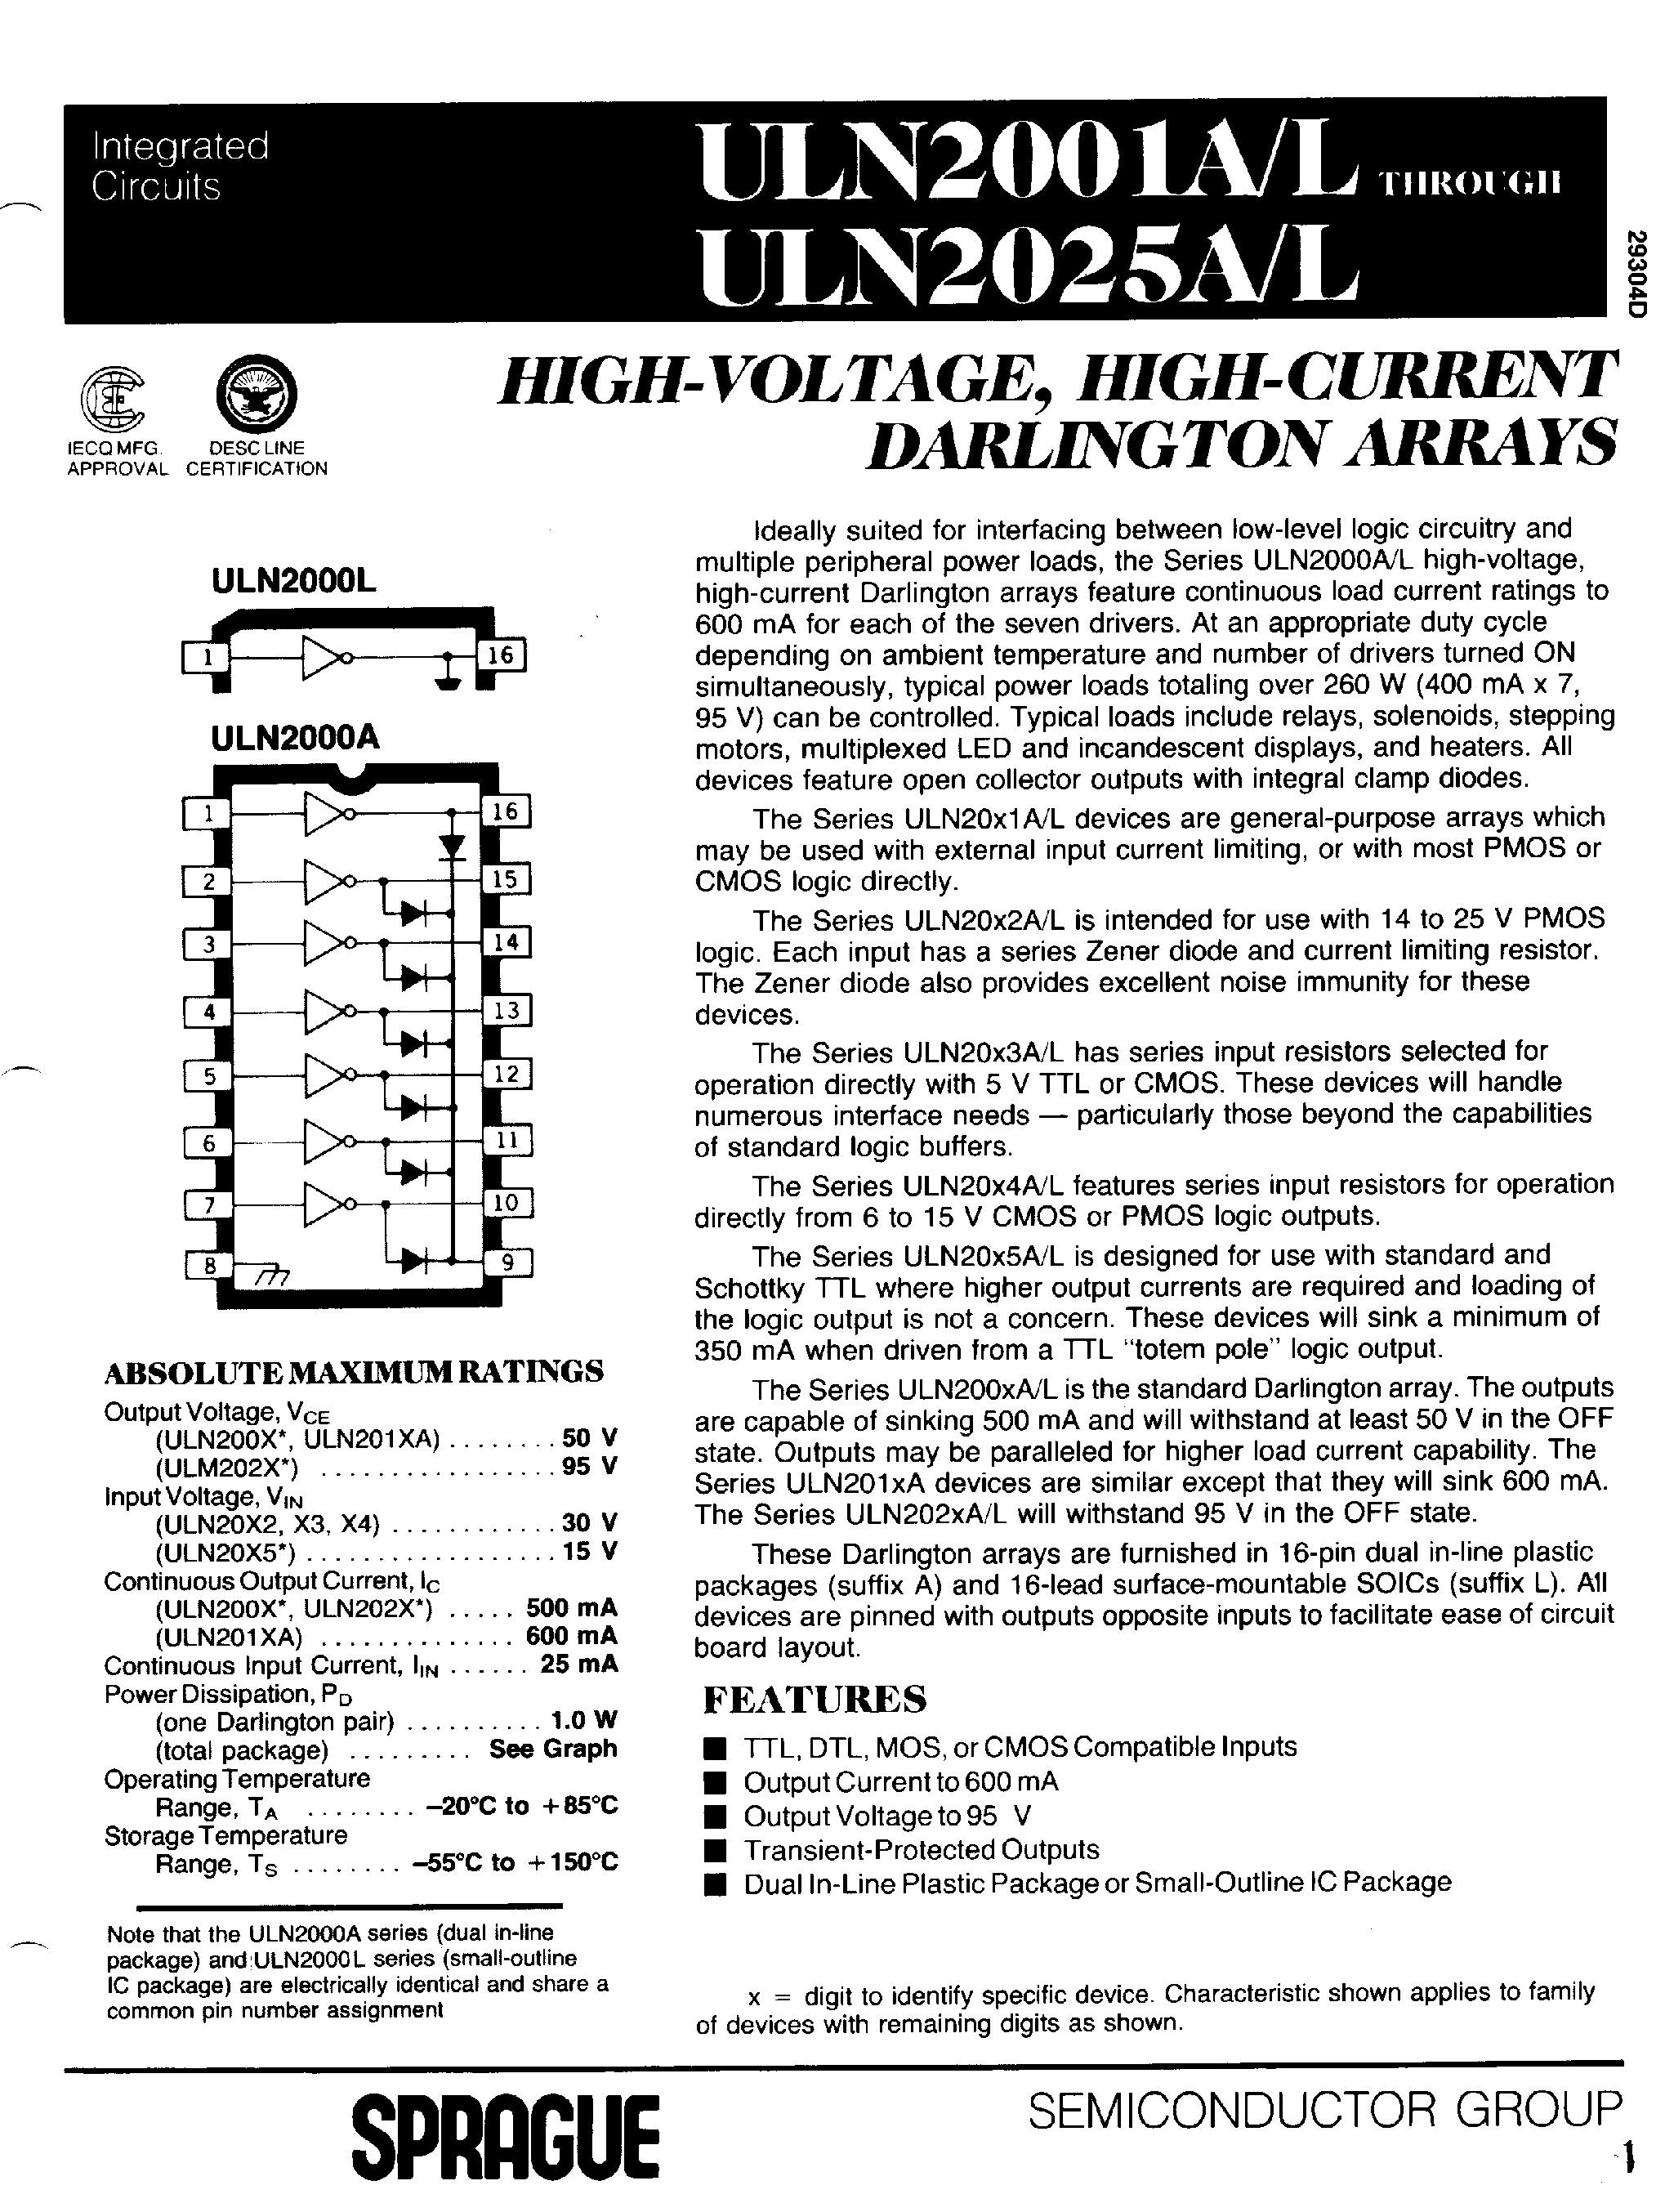 Datasheet ULN2005A - (ULN2001A - ULN2005A) High Voltage / High Current Darlington Arrays page 1